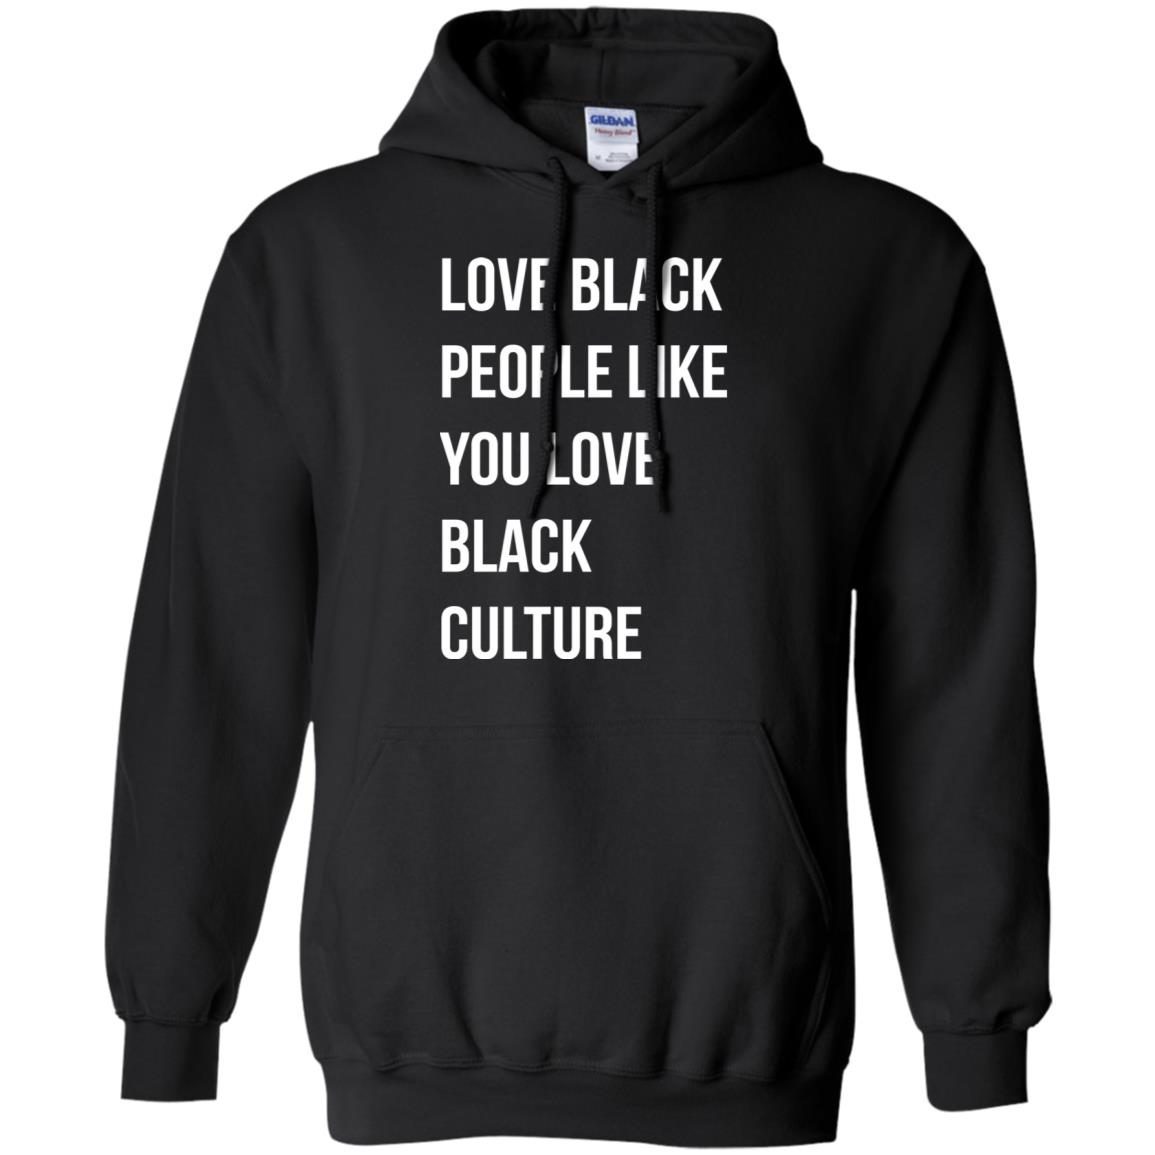 Love black people like you love black culture shirt 2